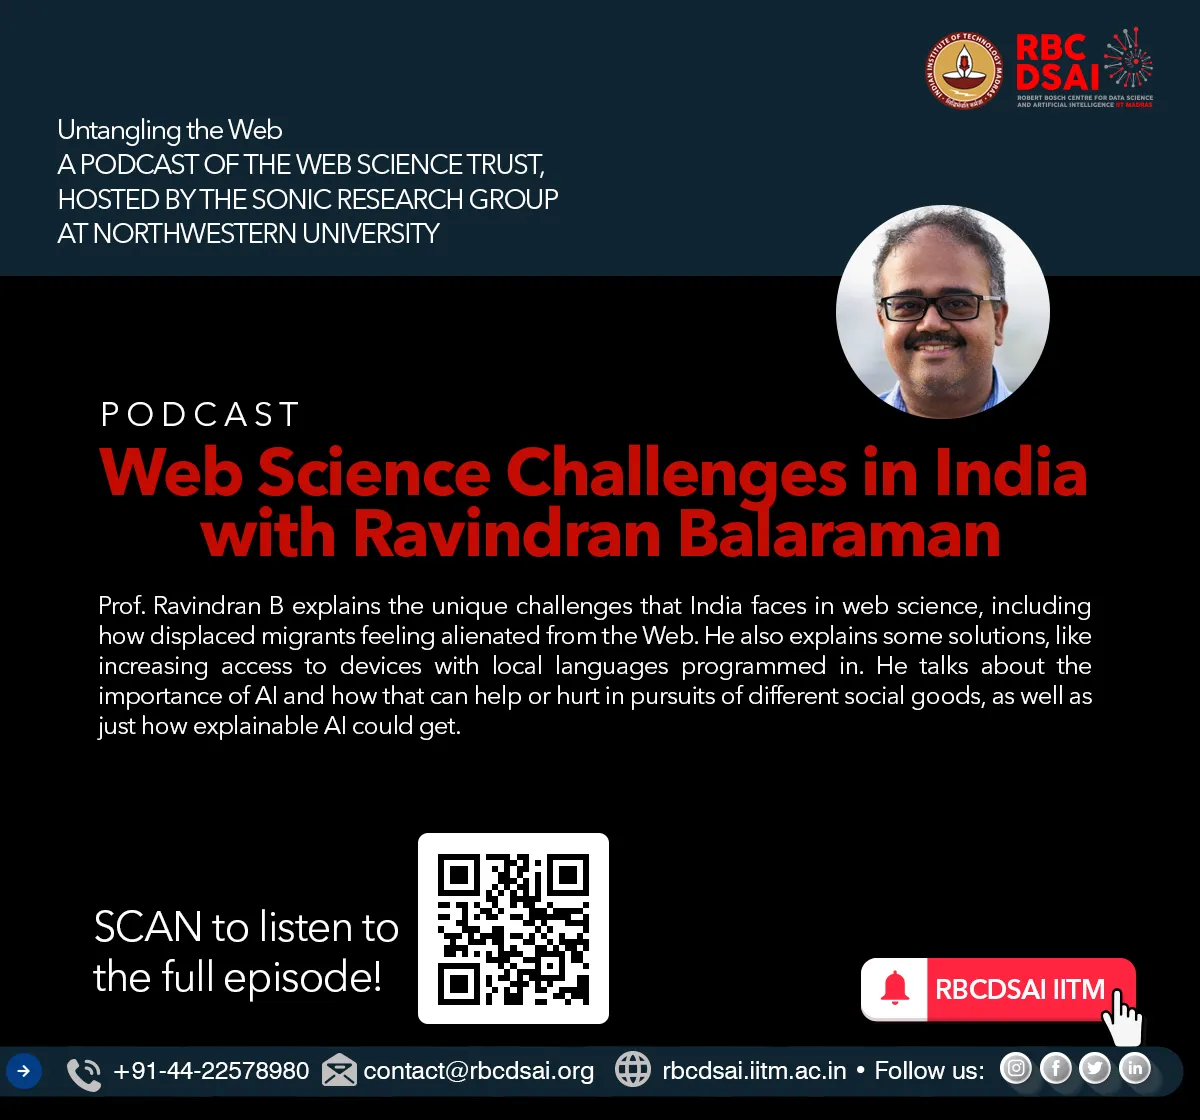 Web Science Challenges in India with Ravindran Balaraman